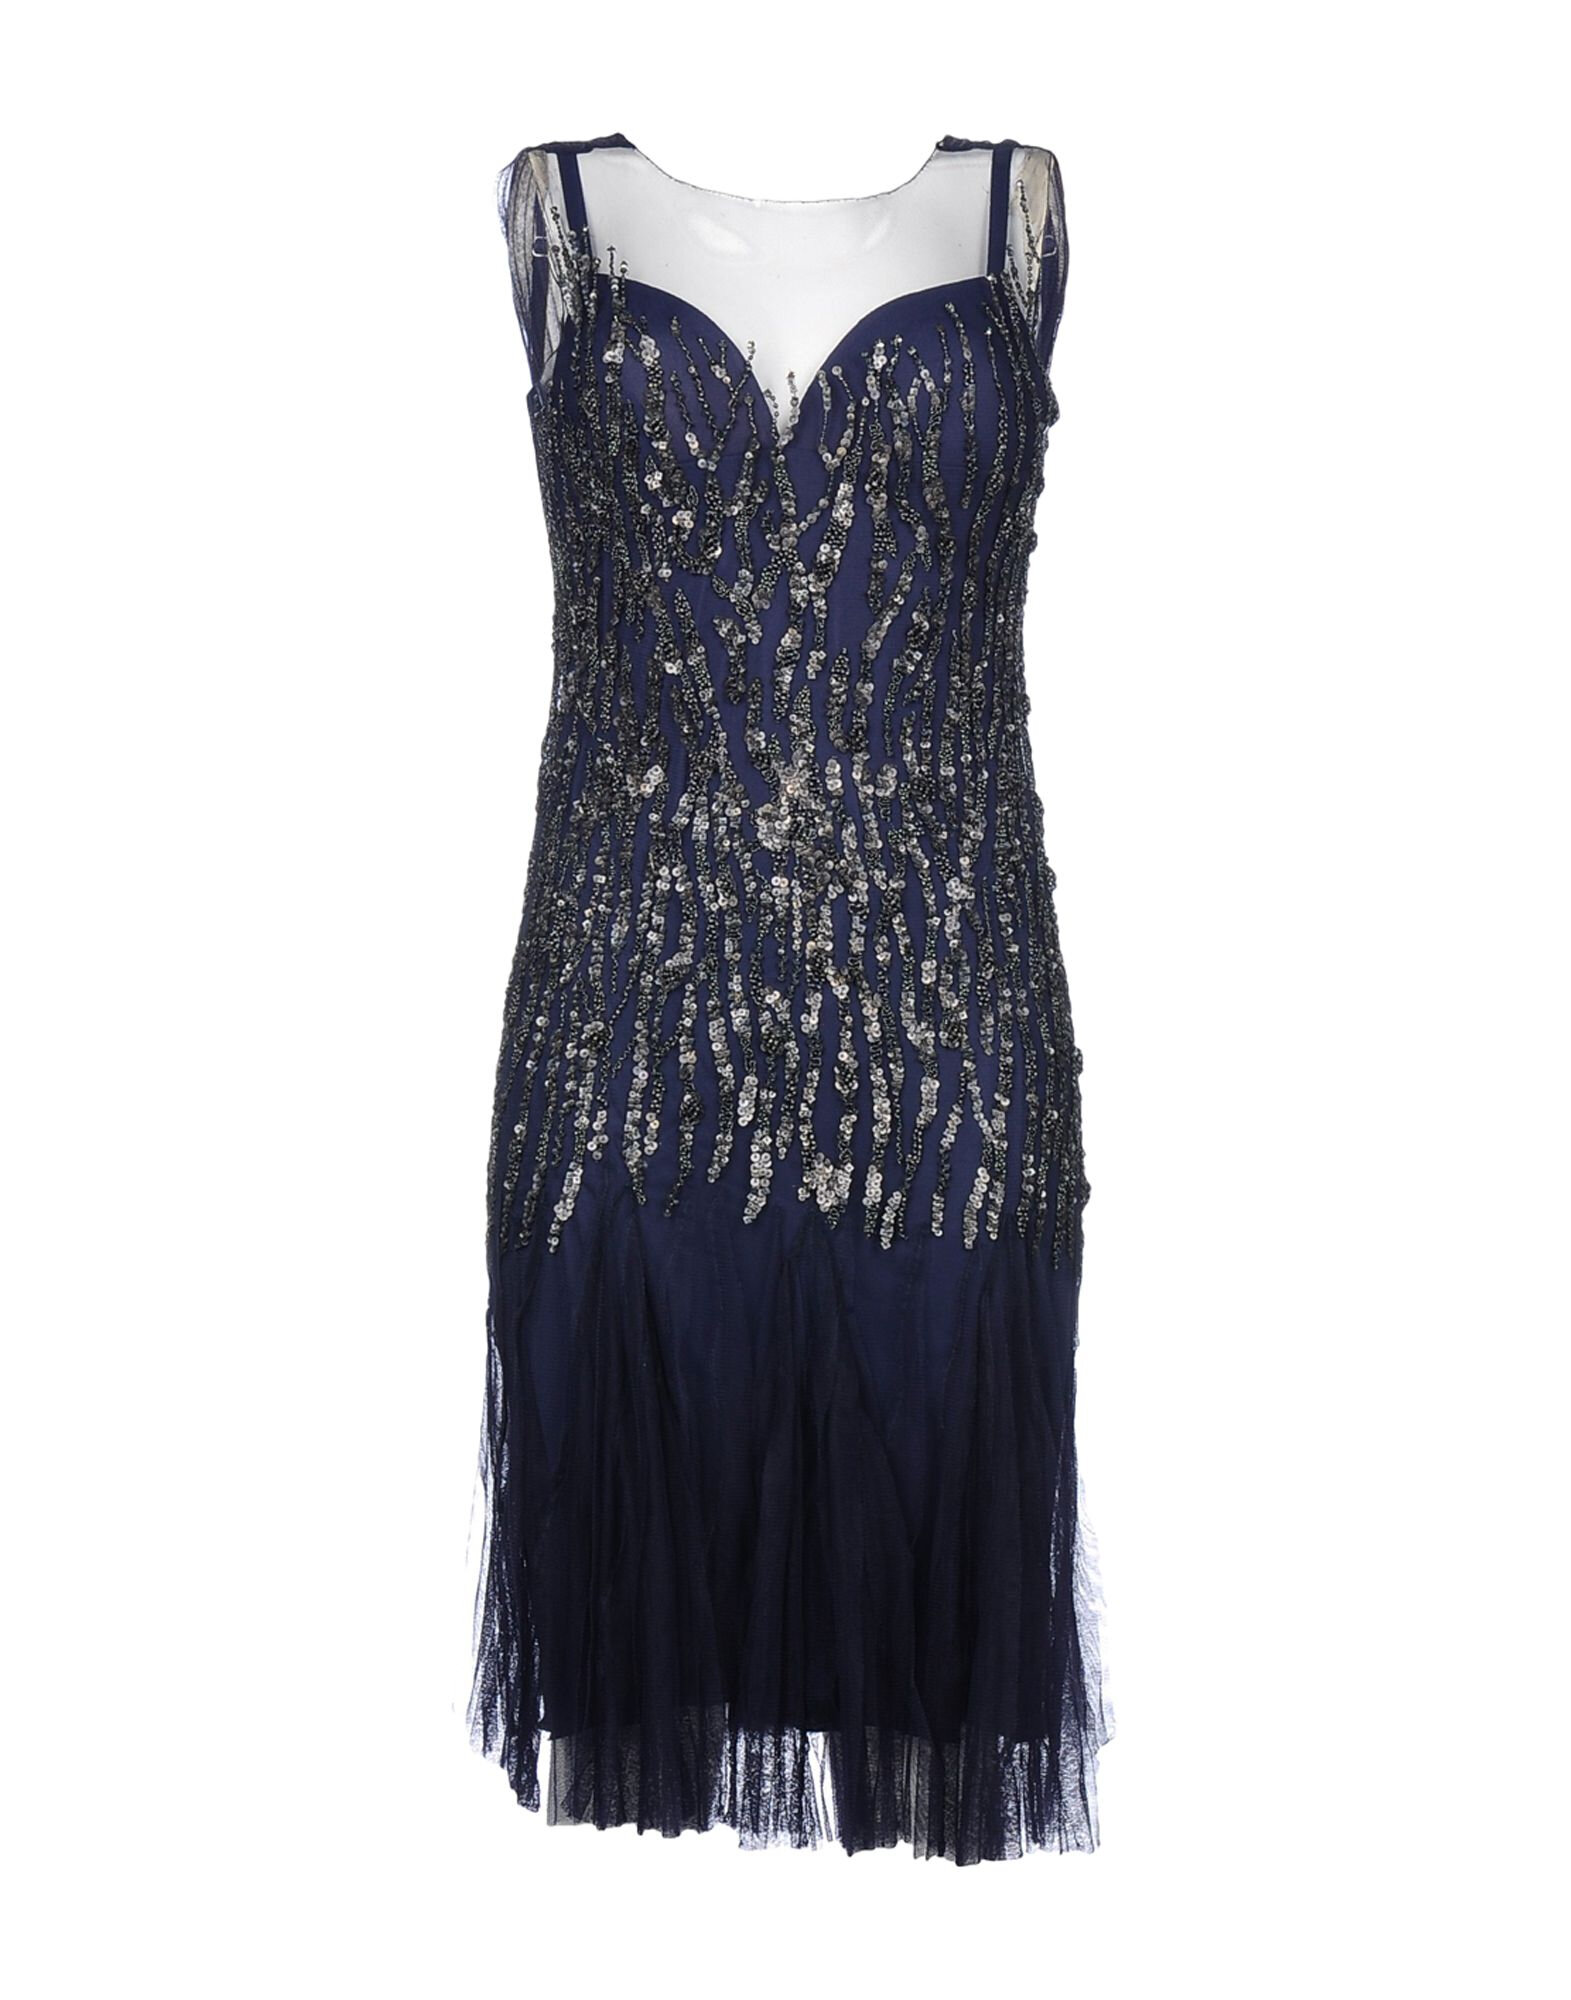 Alberta Ferretti Sequin-Embellished Tulle Gown.jpg